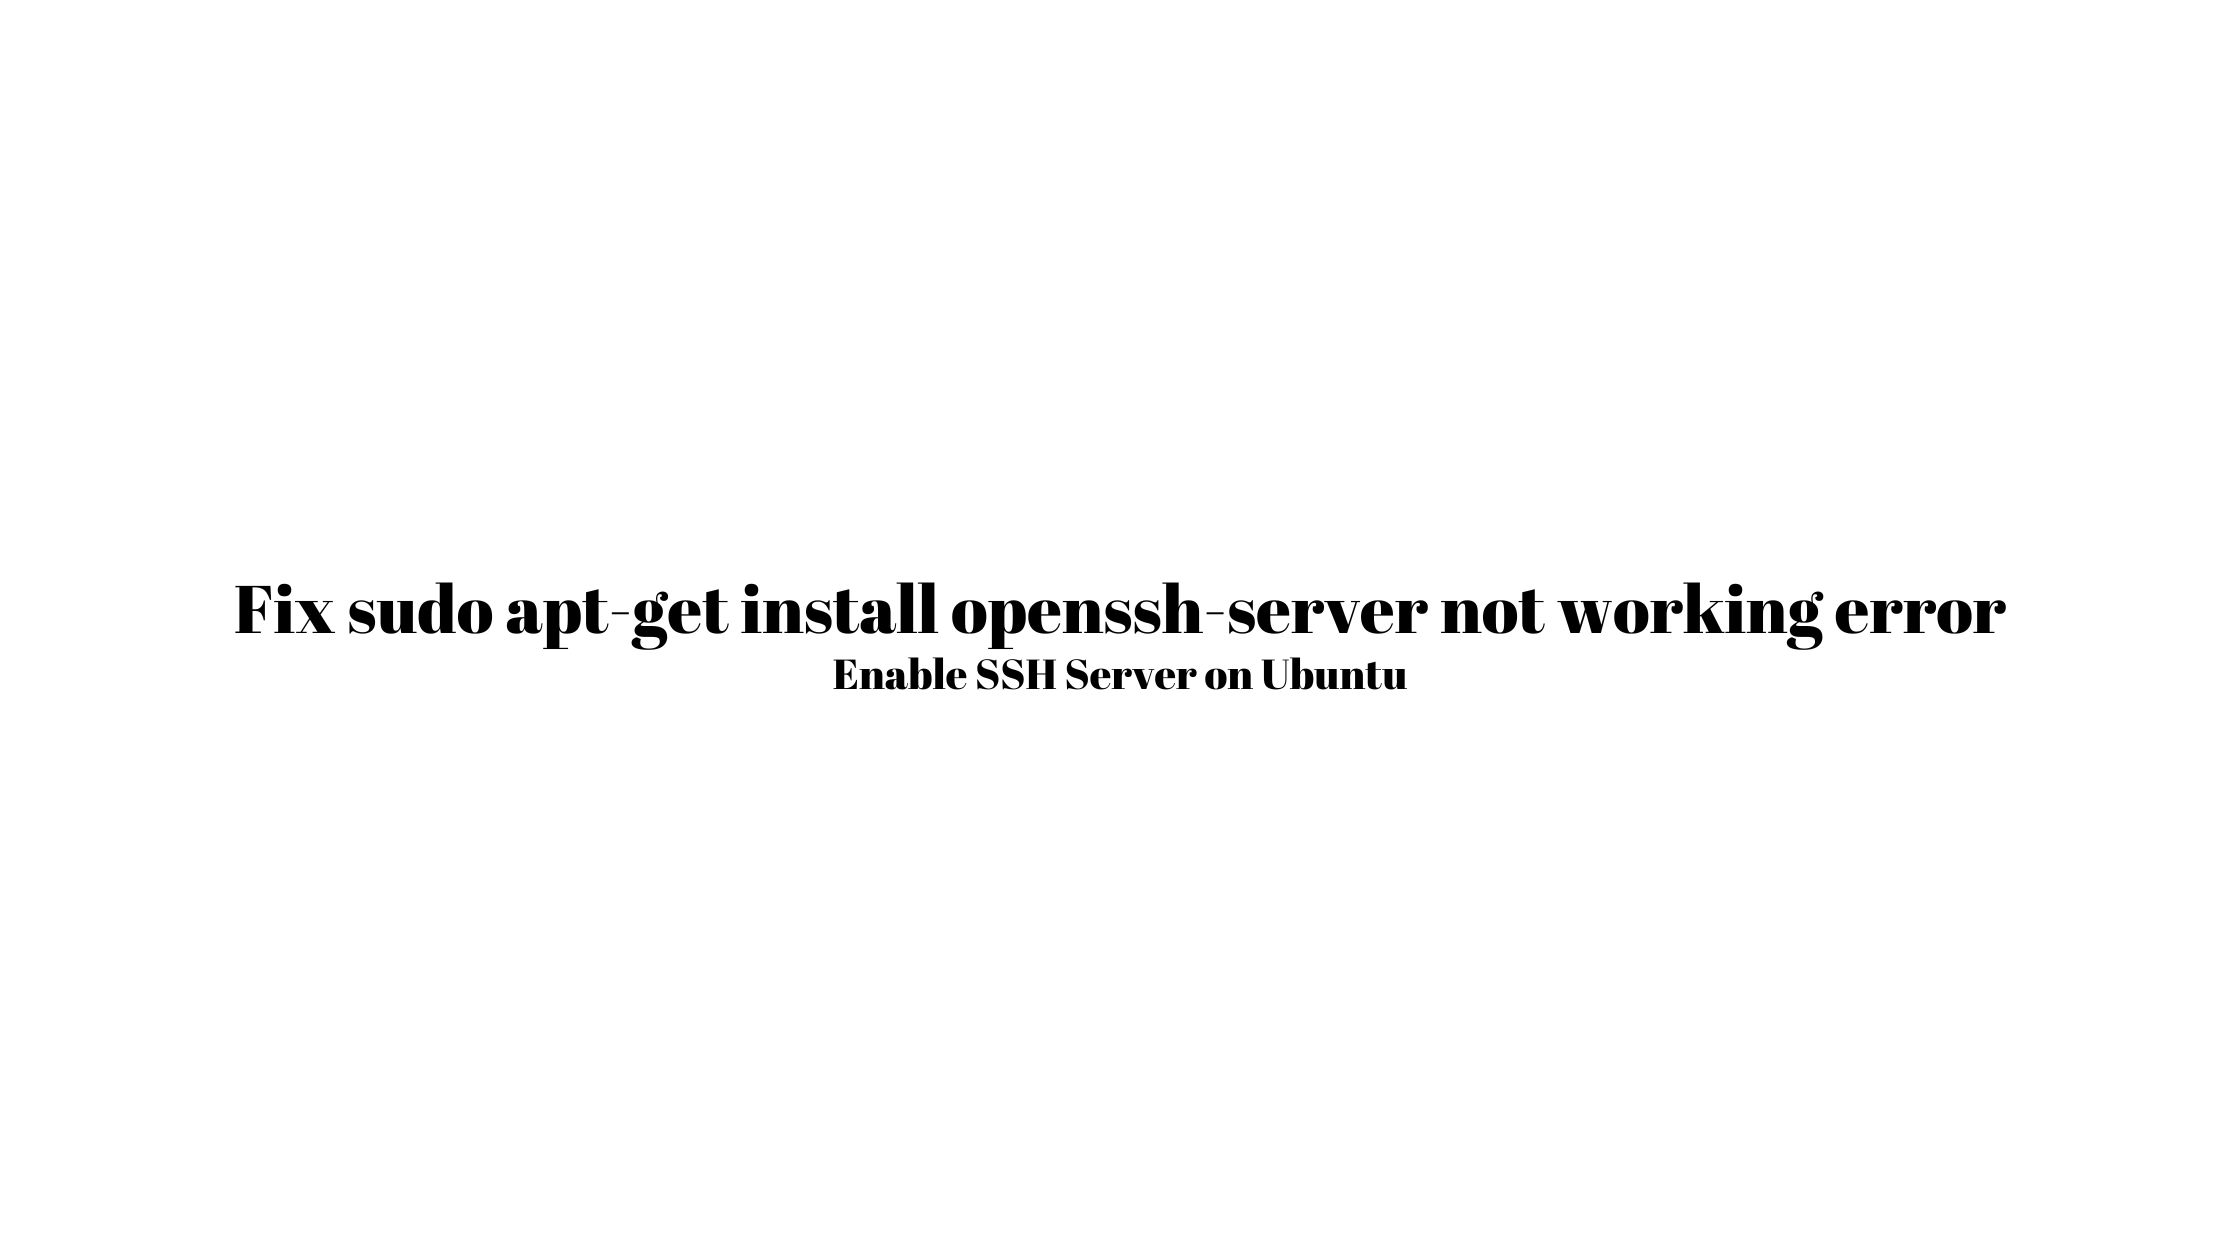 Fix sudo apt-get install openssh-server not working error